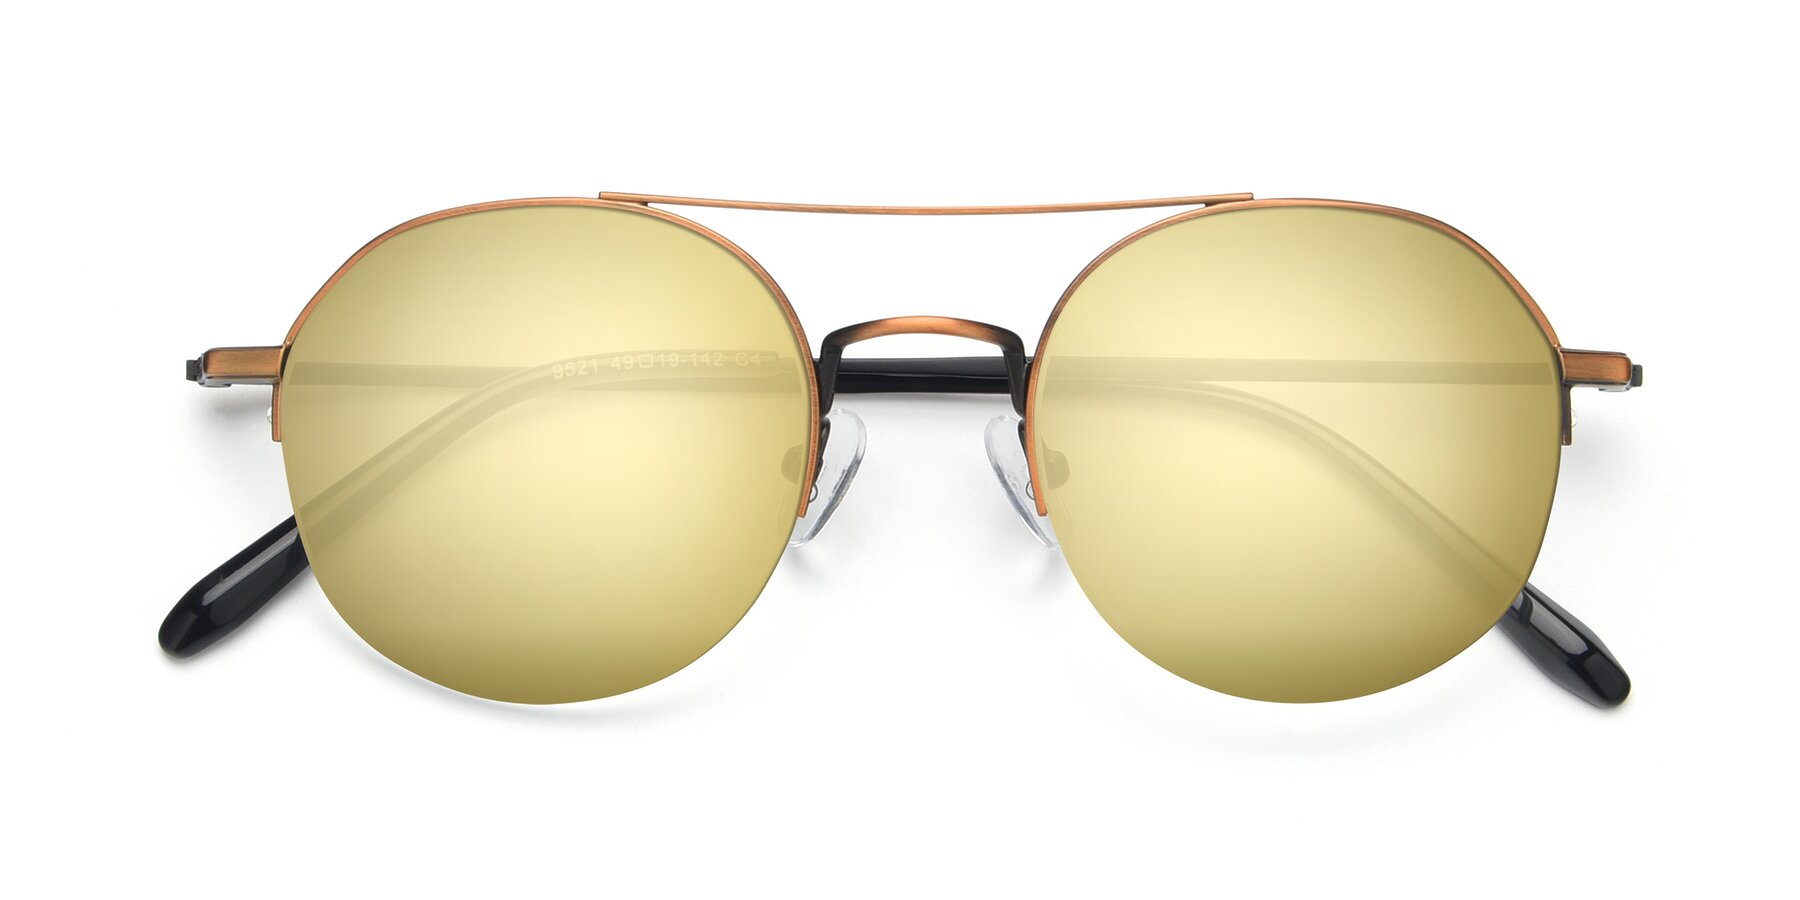 Bronze Double Bridge Round Semi-Rimless Mirrored Sunglasses with Gold ...